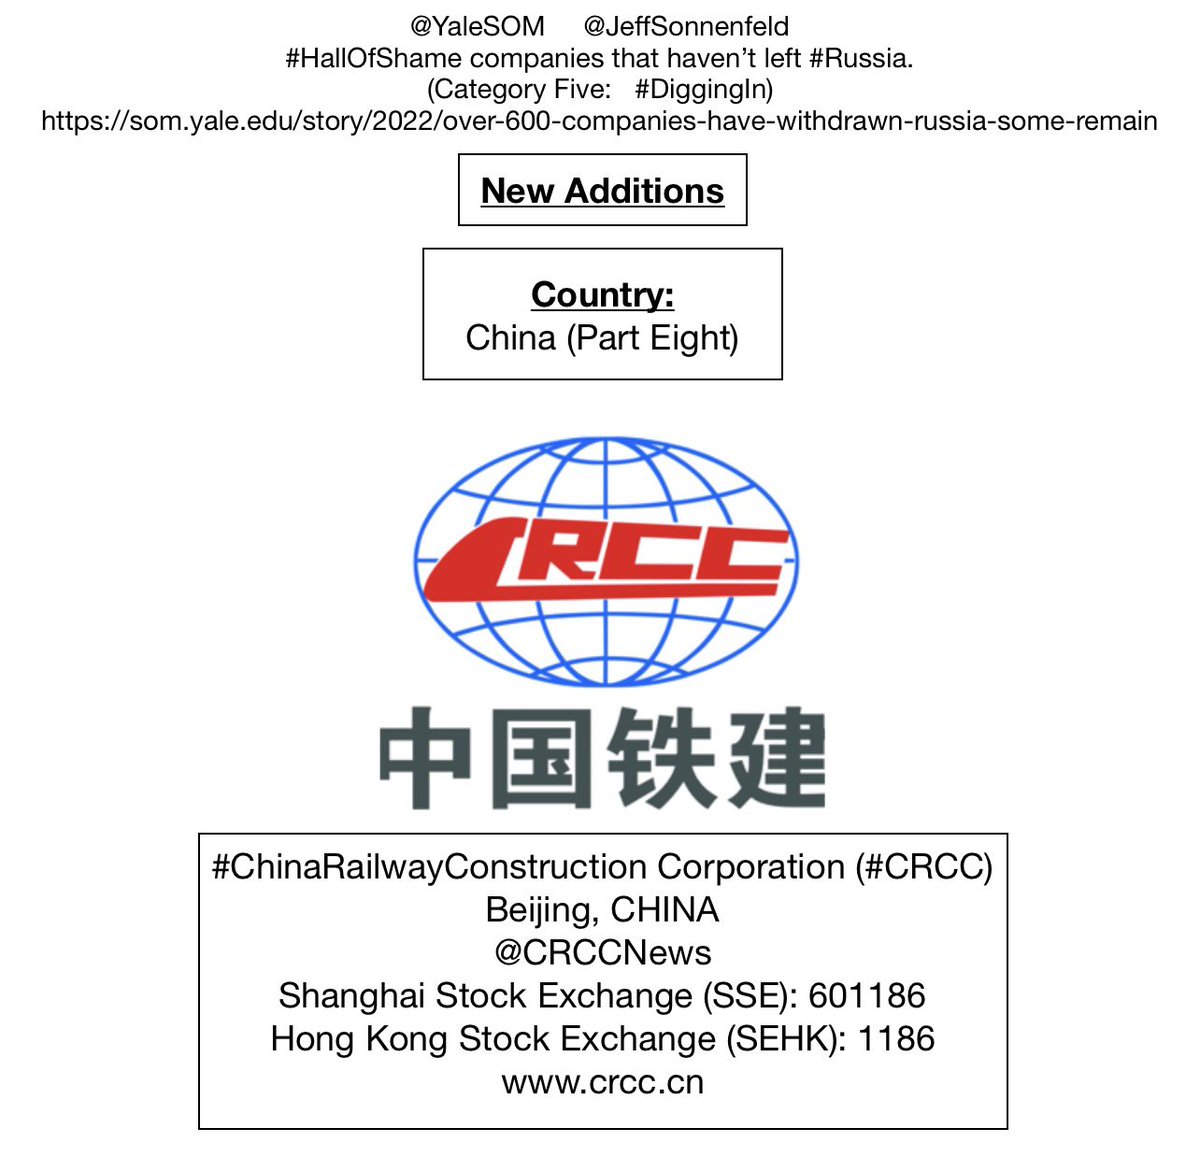 (plz see thread above) 👆

#Ukraine war.

Additions to list of #HallOfShame(#DiggingIn) companies.

Country of company: #CHINA (Part 8)

#ChinaRailwayConstruction Corp.
(#CRCC)
#Beijing, CHINA
@CRCCNews
#SSE: 601186
#SEHK: 1186
en.m.wikipedia.org/wiki/China_Rai…
(crcc.cn)